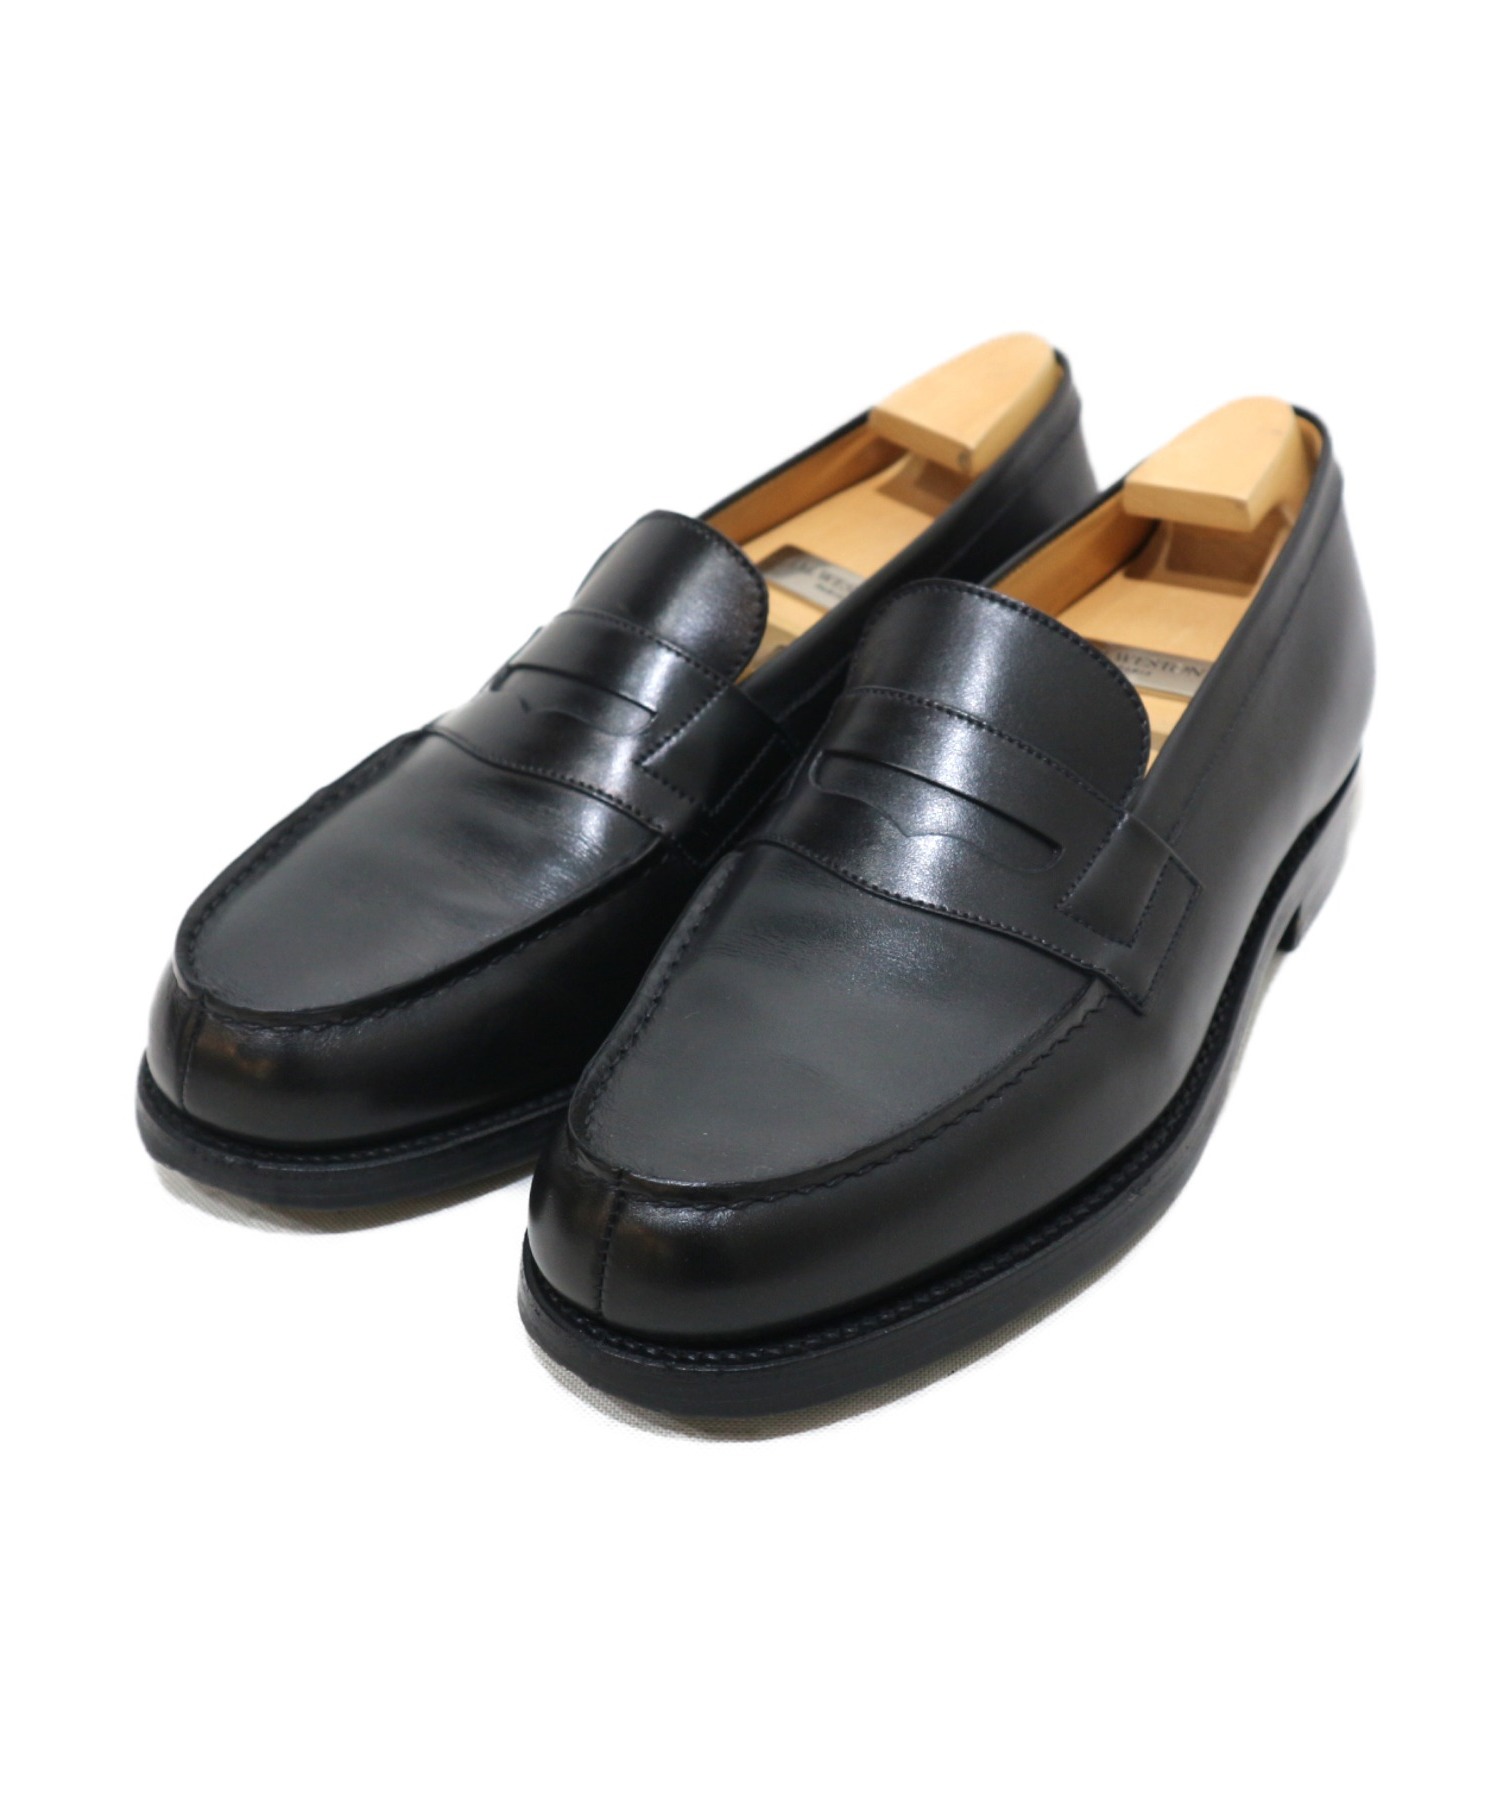 J.M WESTON Signature loafer #180 5/C 黒 - ドレス/ビジネス